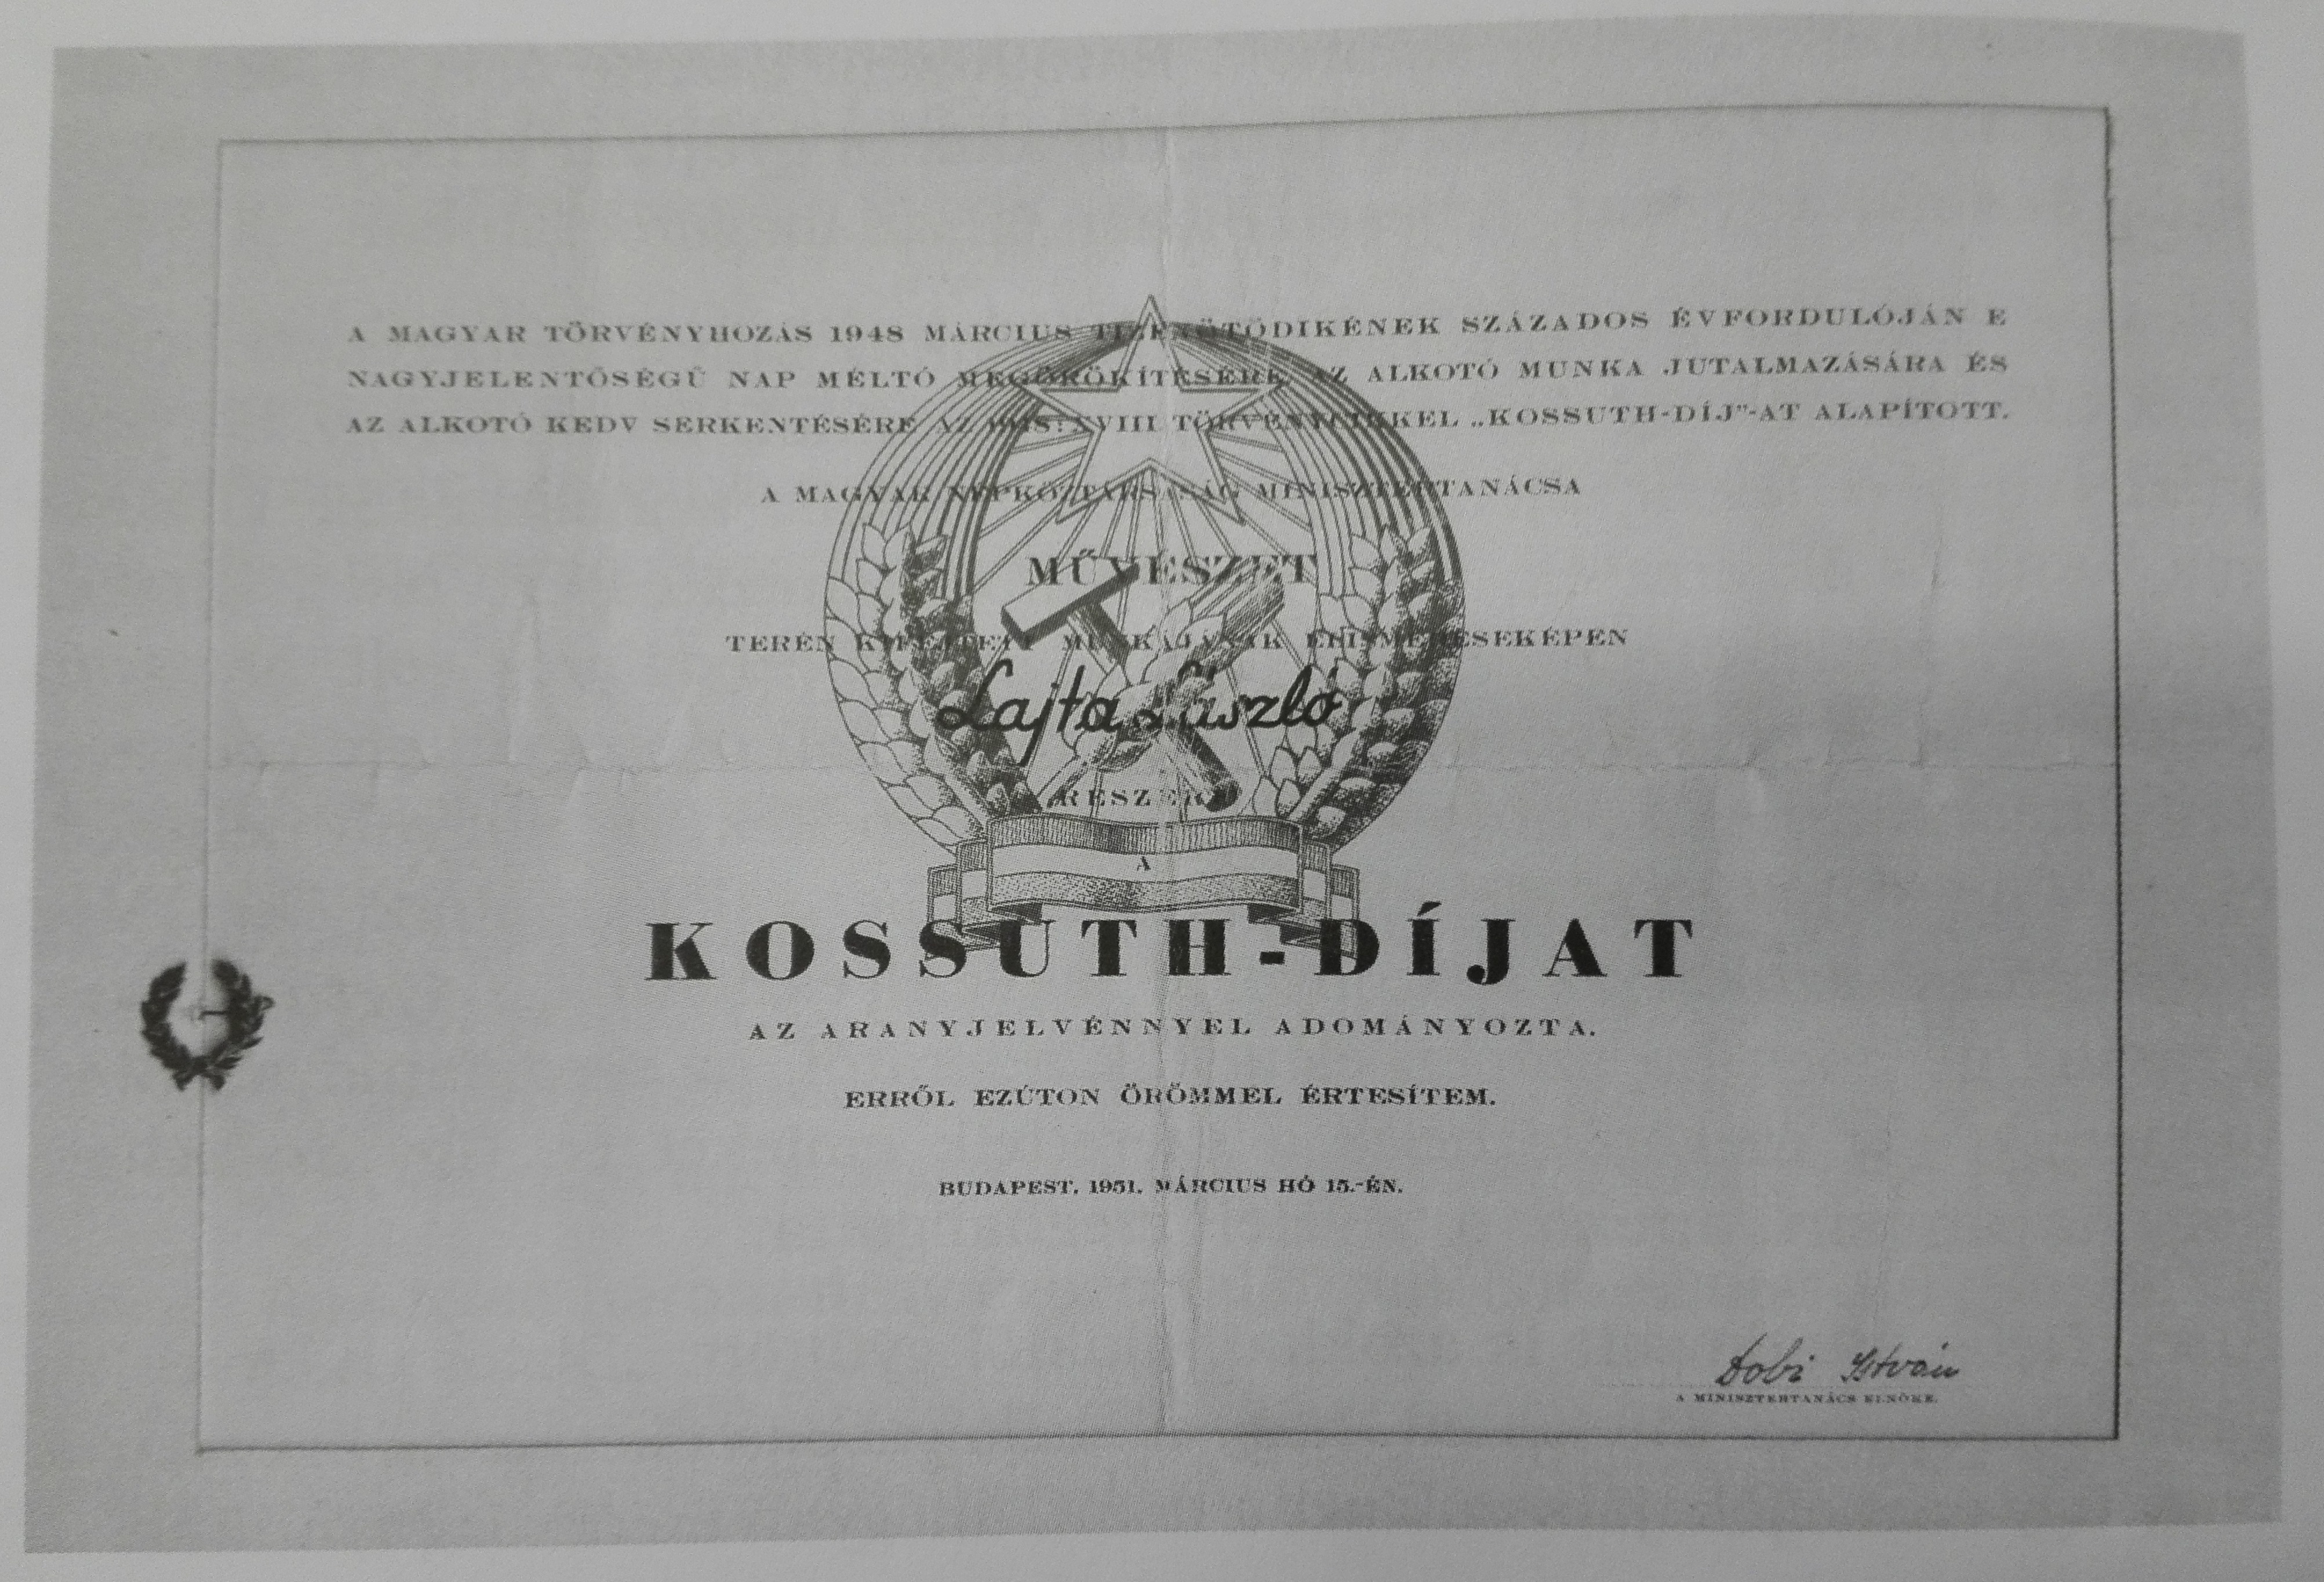 Kossuth Prize of Lajtha, László